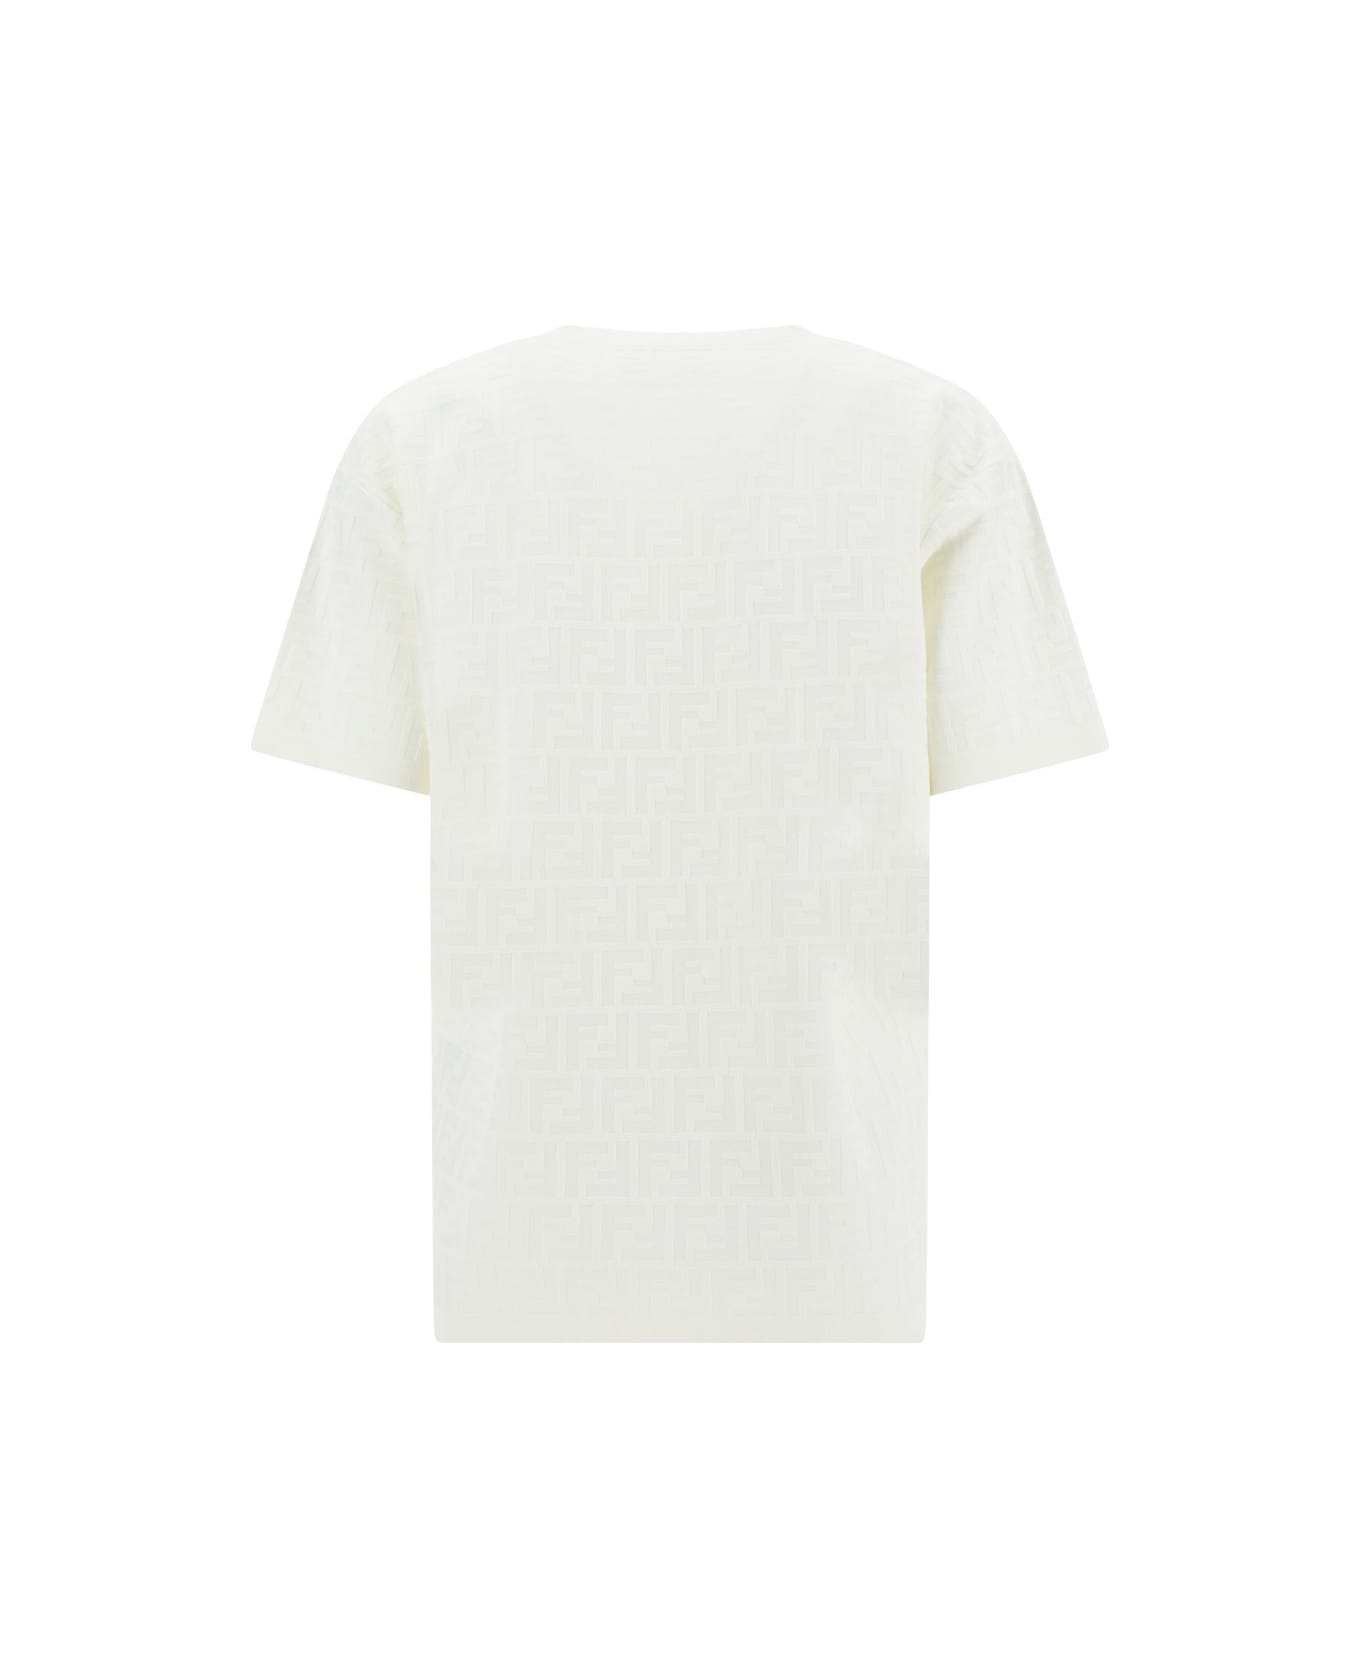 Fendi T-shirt By - White Tシャツ